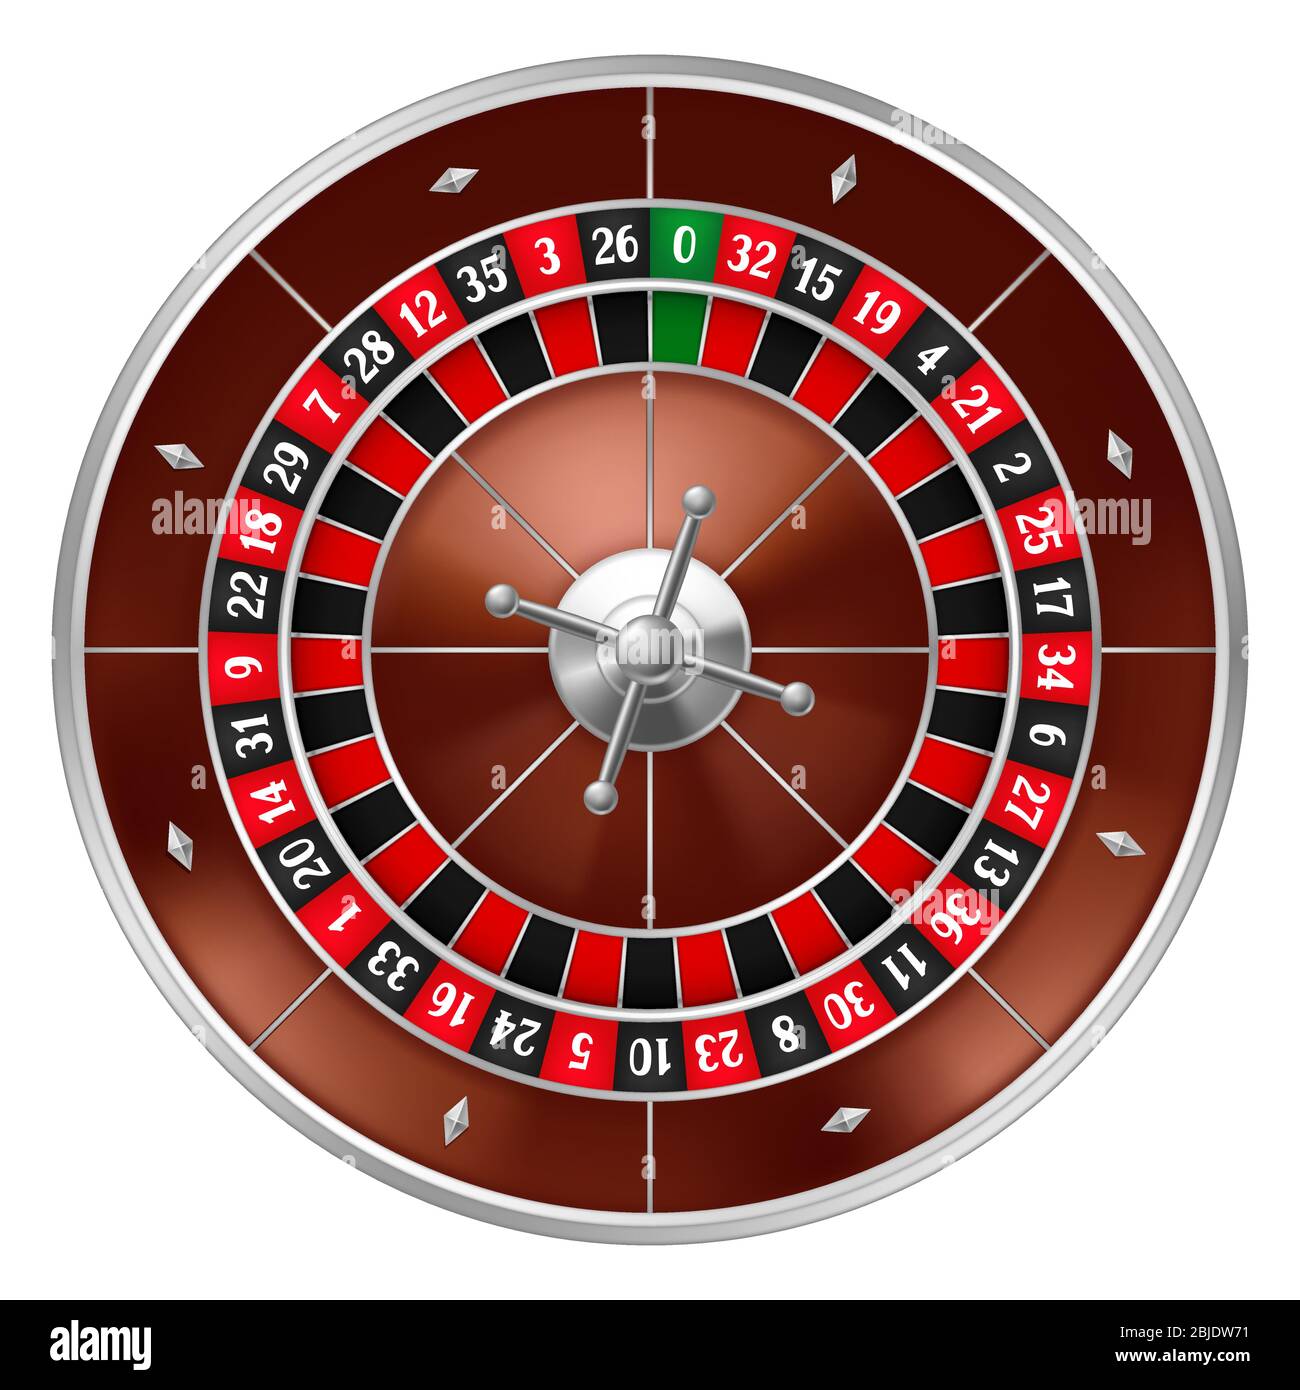 Realistic casino gambling roulette wheel. Stock Vector